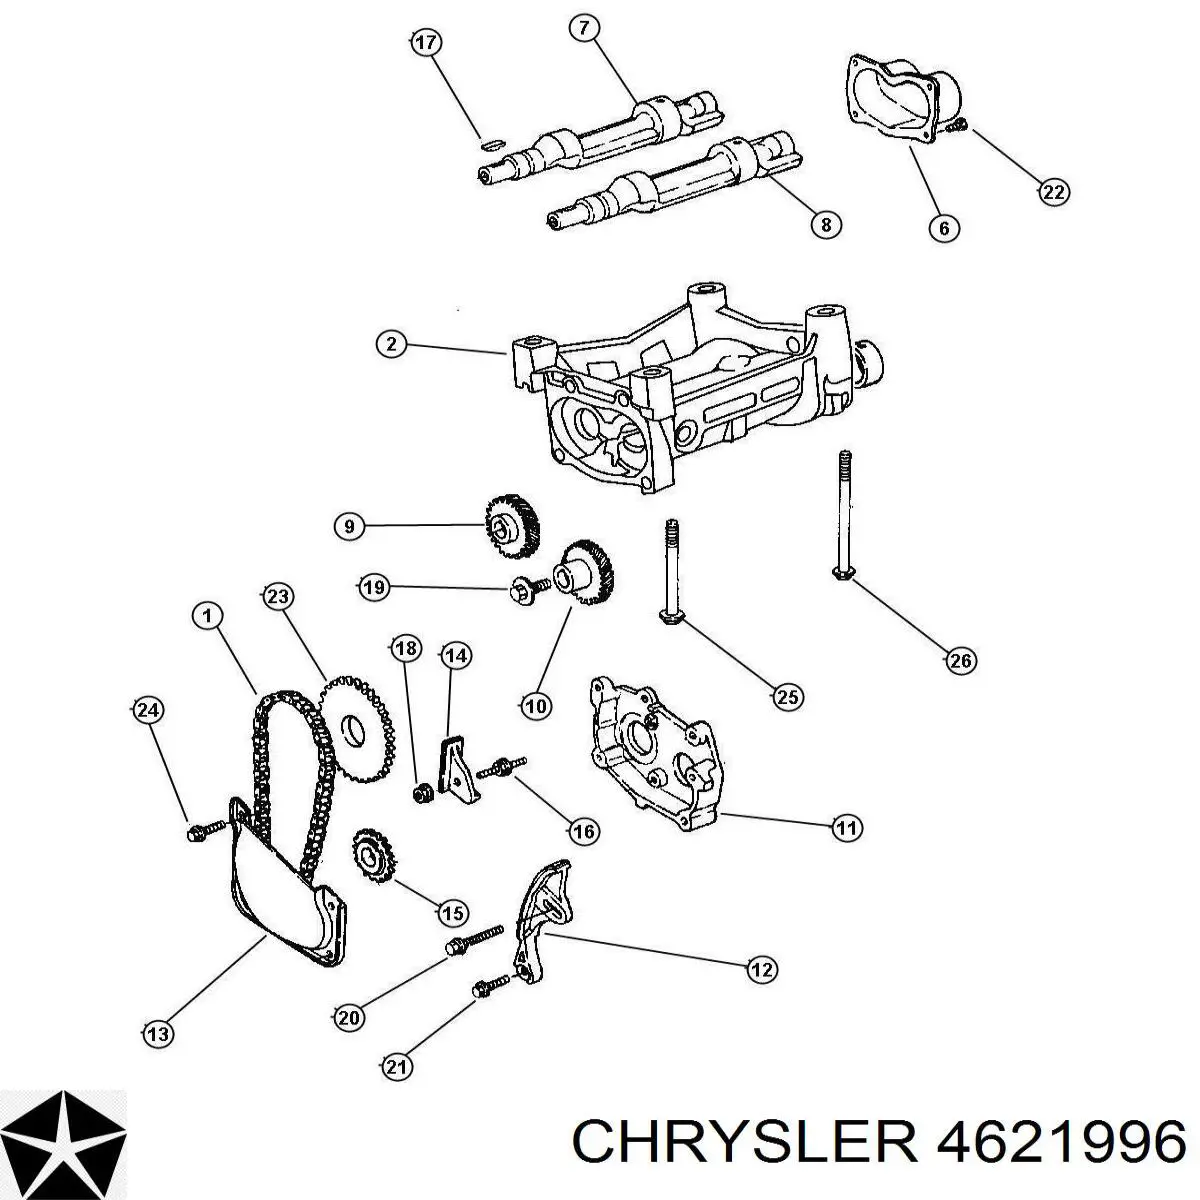 4621996 Chrysler цепь грм балансировочного вала